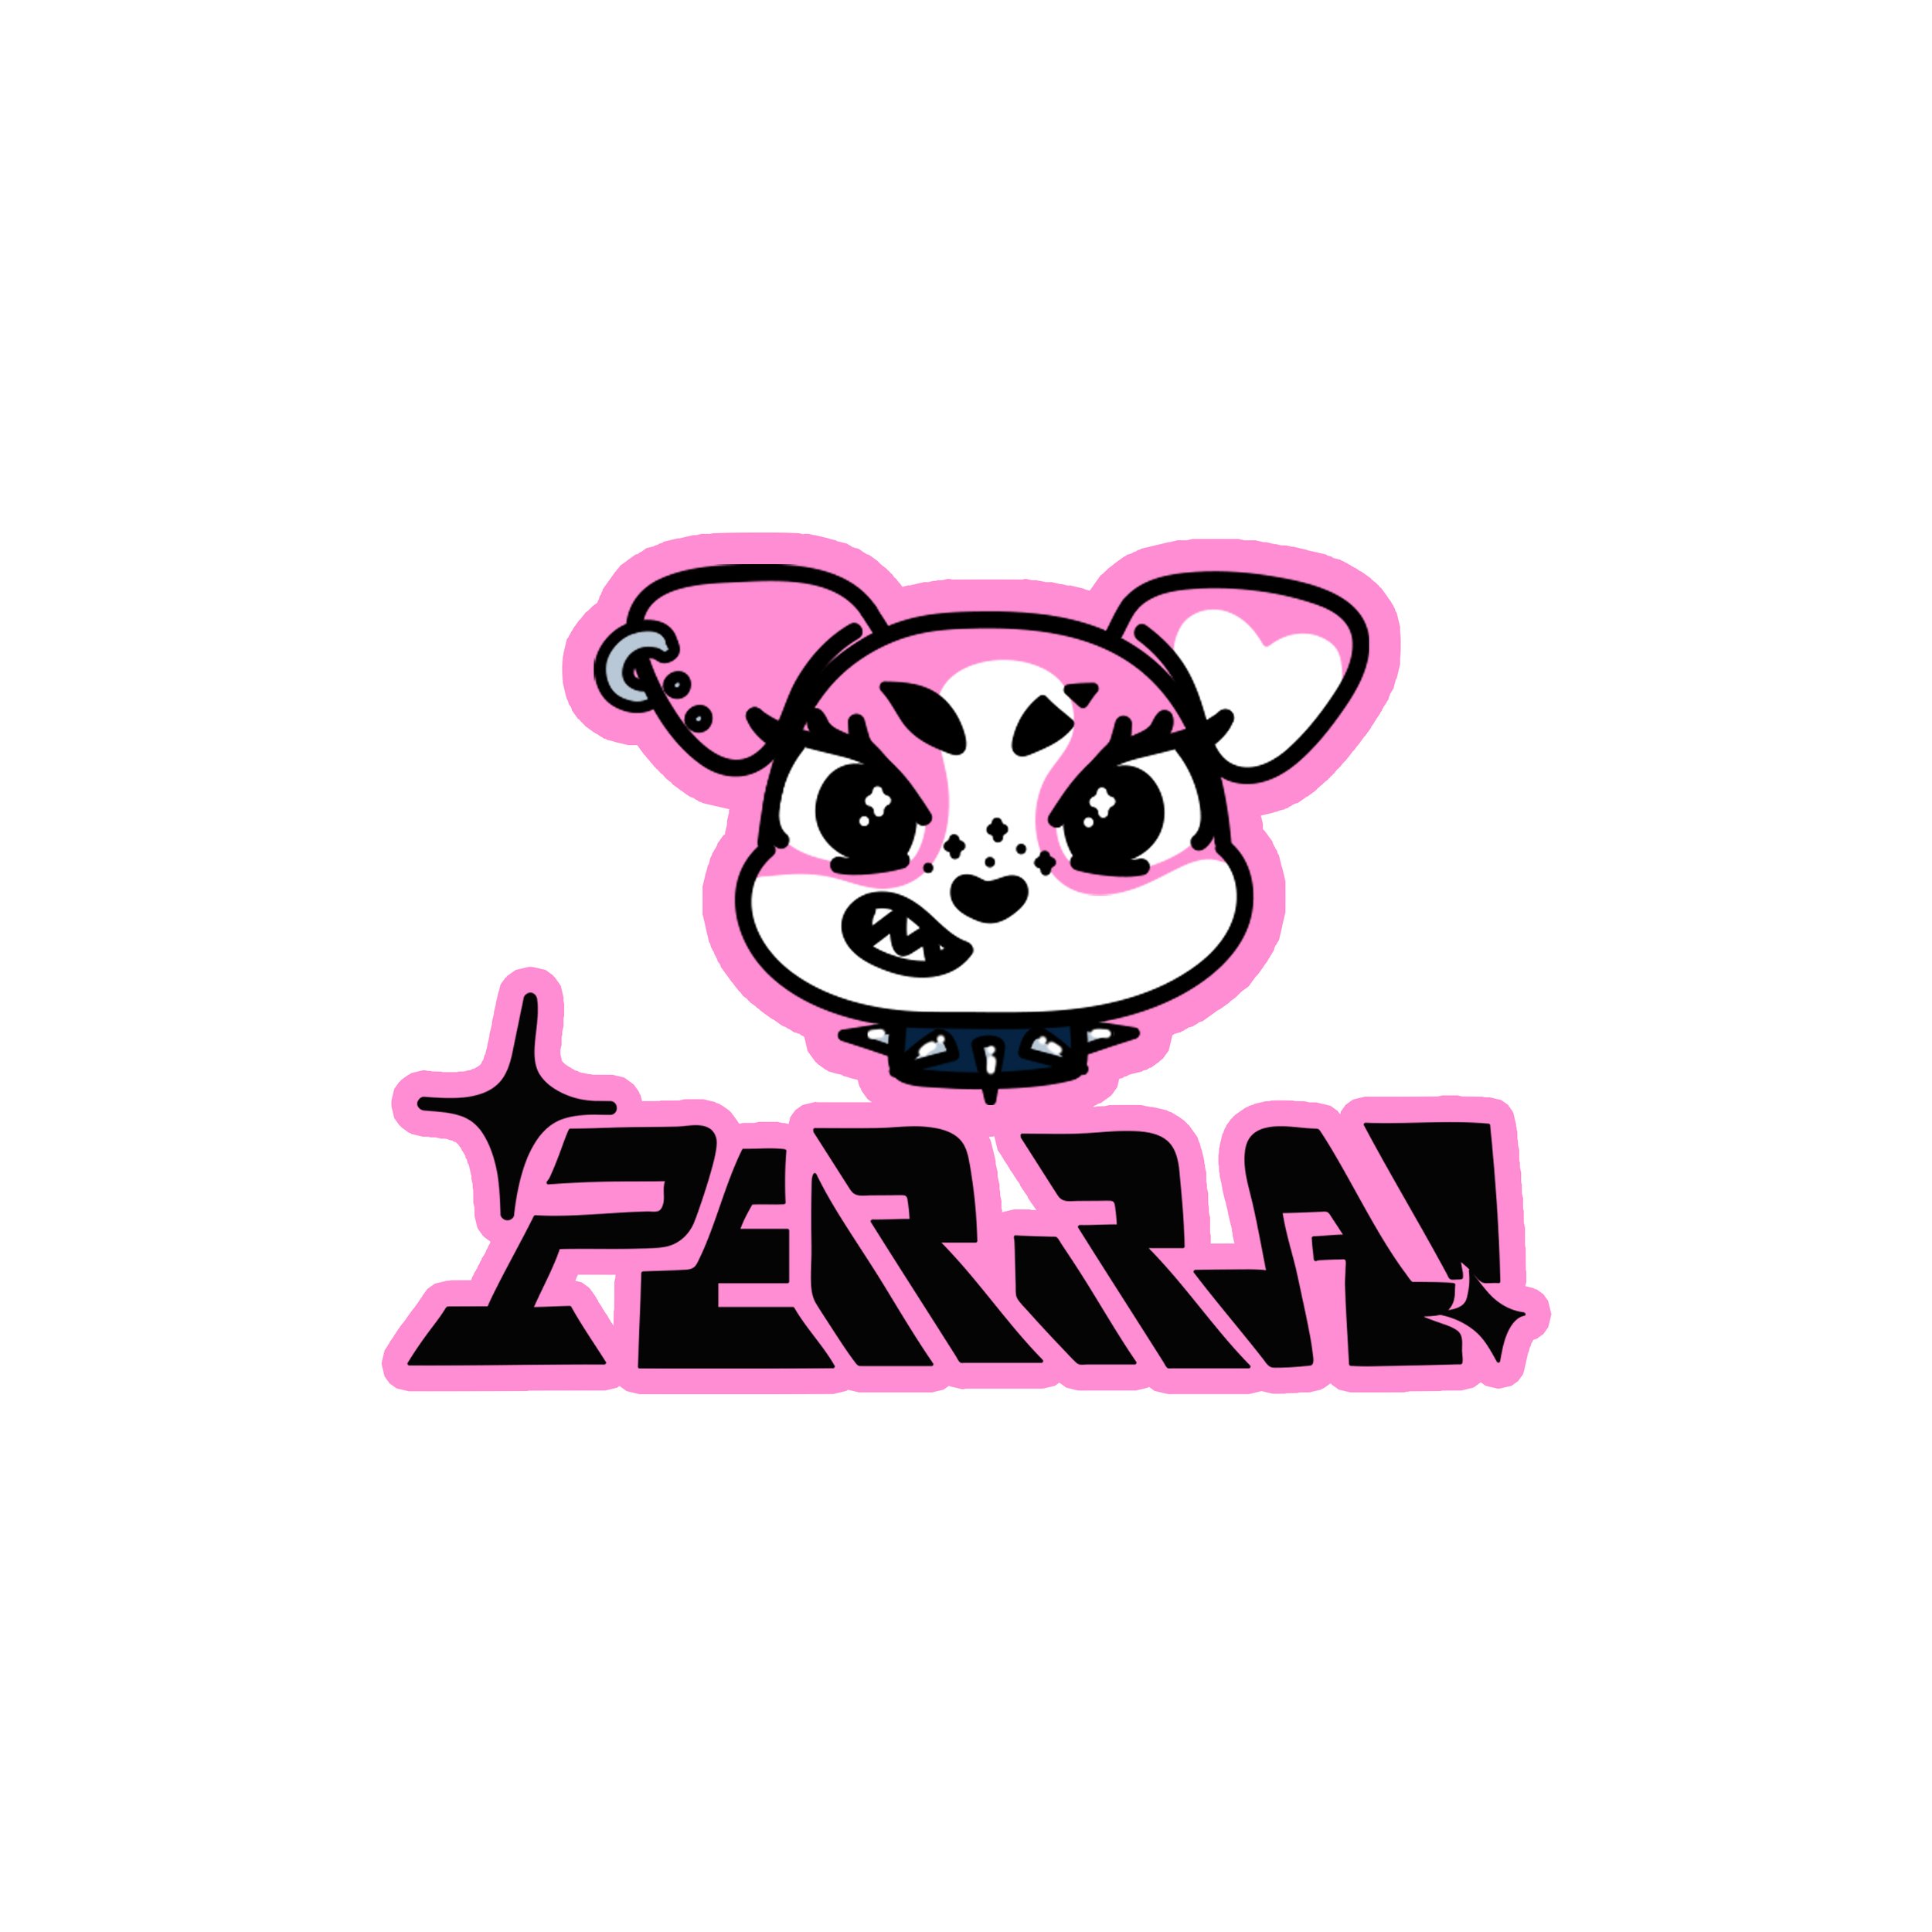 PERRA perrita face and text white.jpg